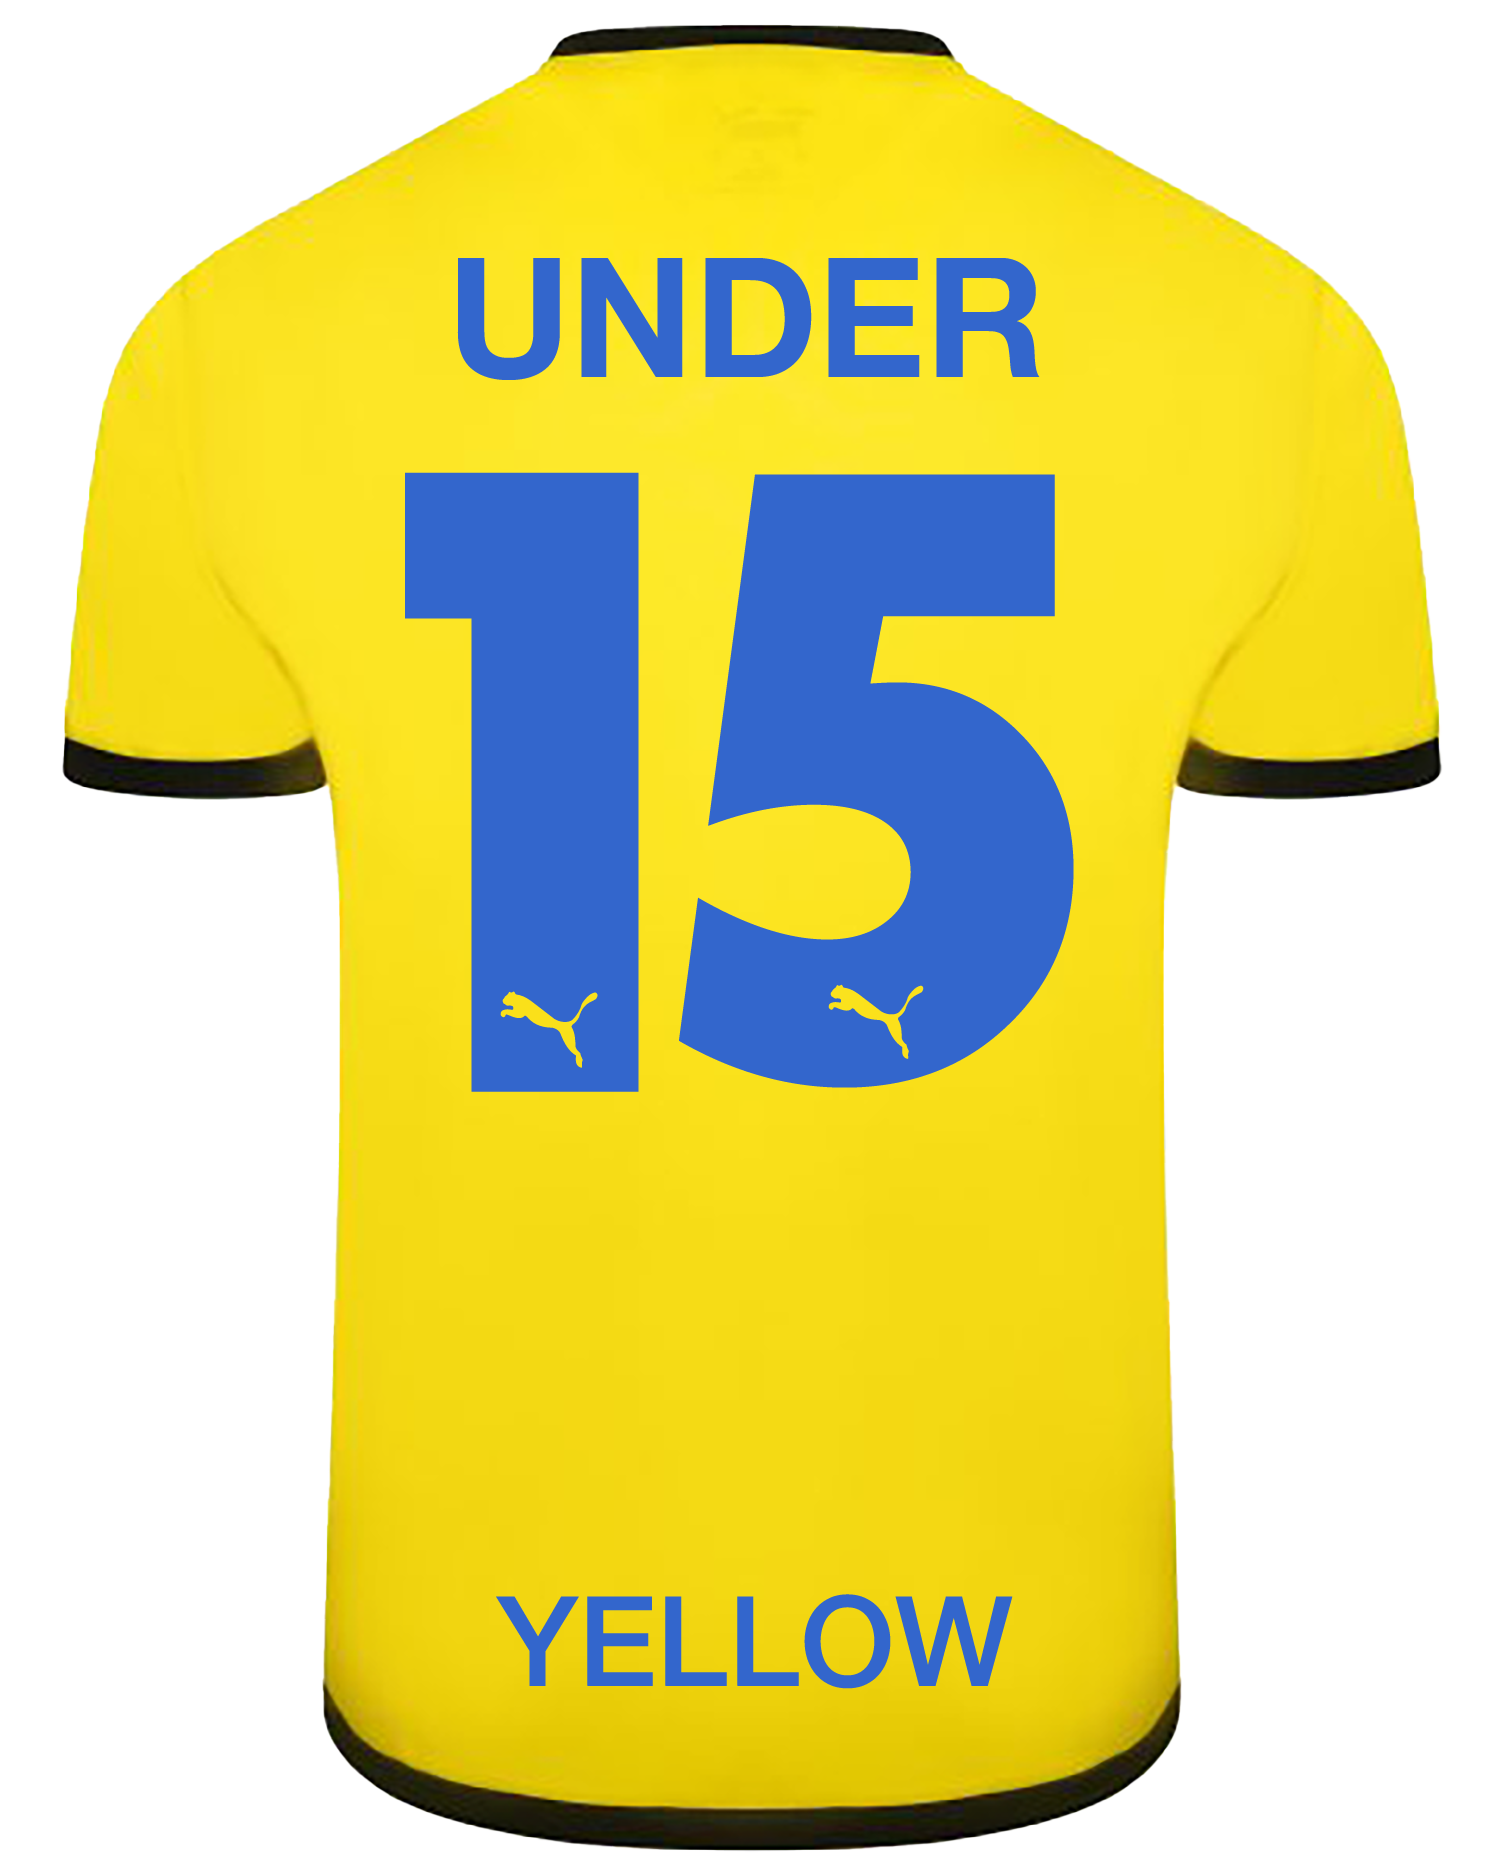 Under 15 (Yellow)